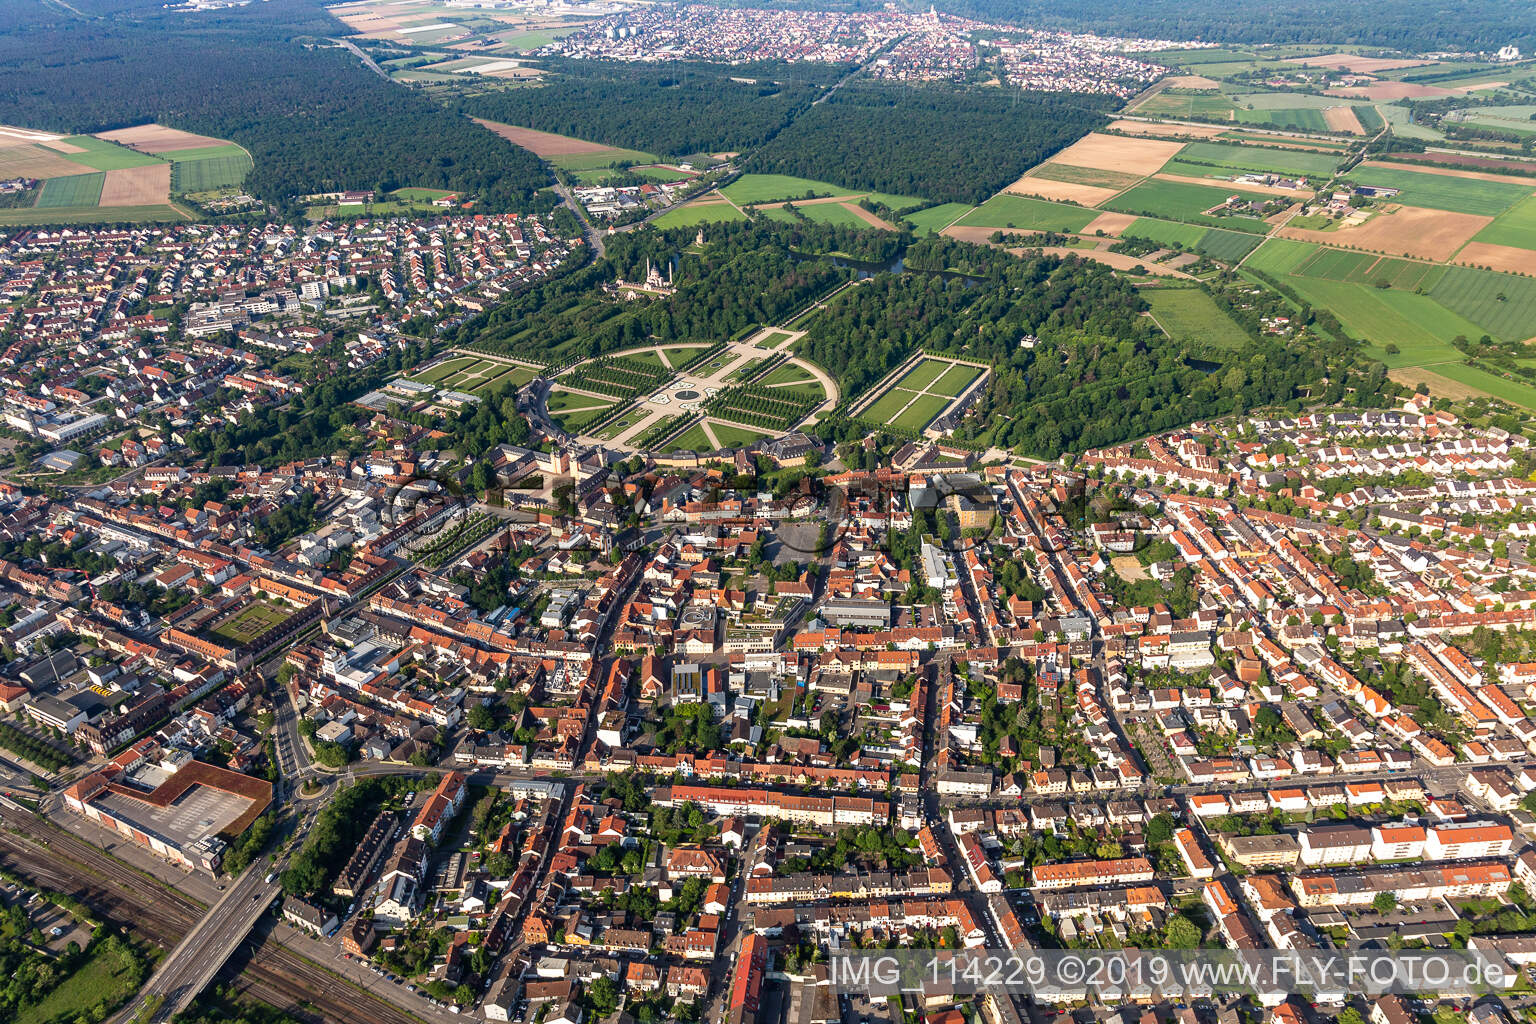 Aerial photograpy of Castle garden in Schwetzingen in the state Baden-Wuerttemberg, Germany